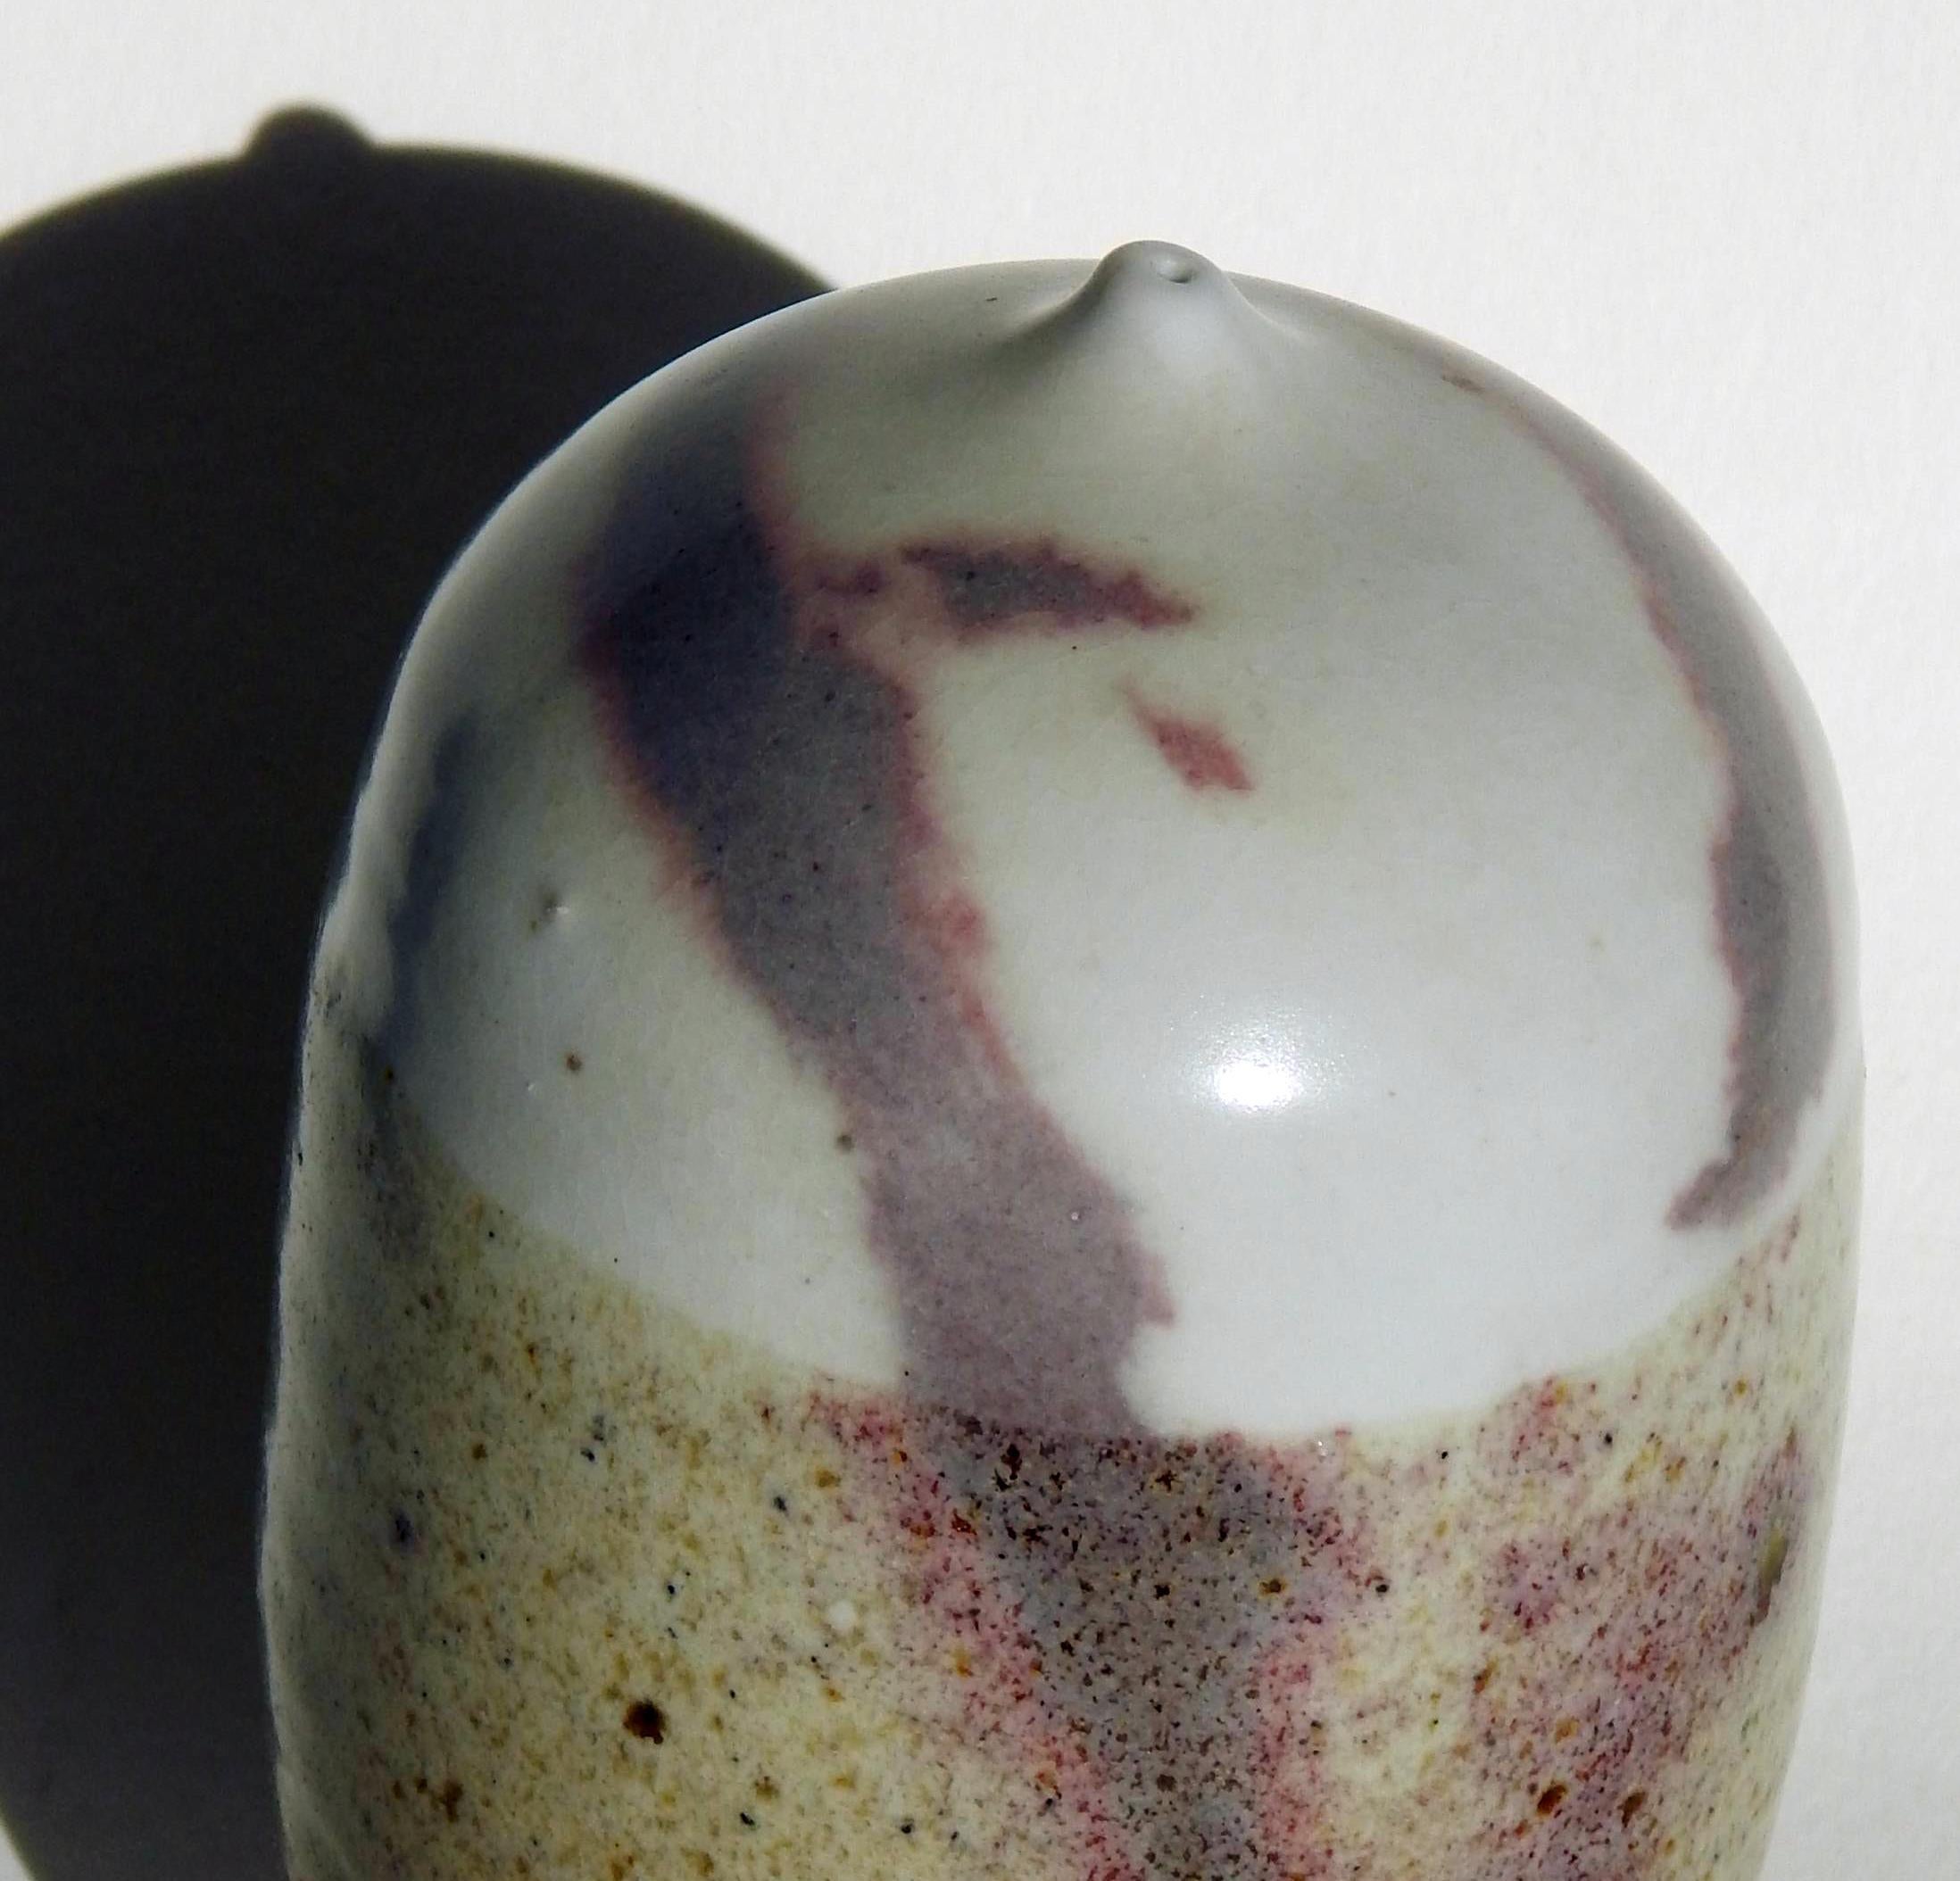 Ceramic Toshiko Takaezu, Important Studio Potter, Moon Pot with Rattle, Great Glaze